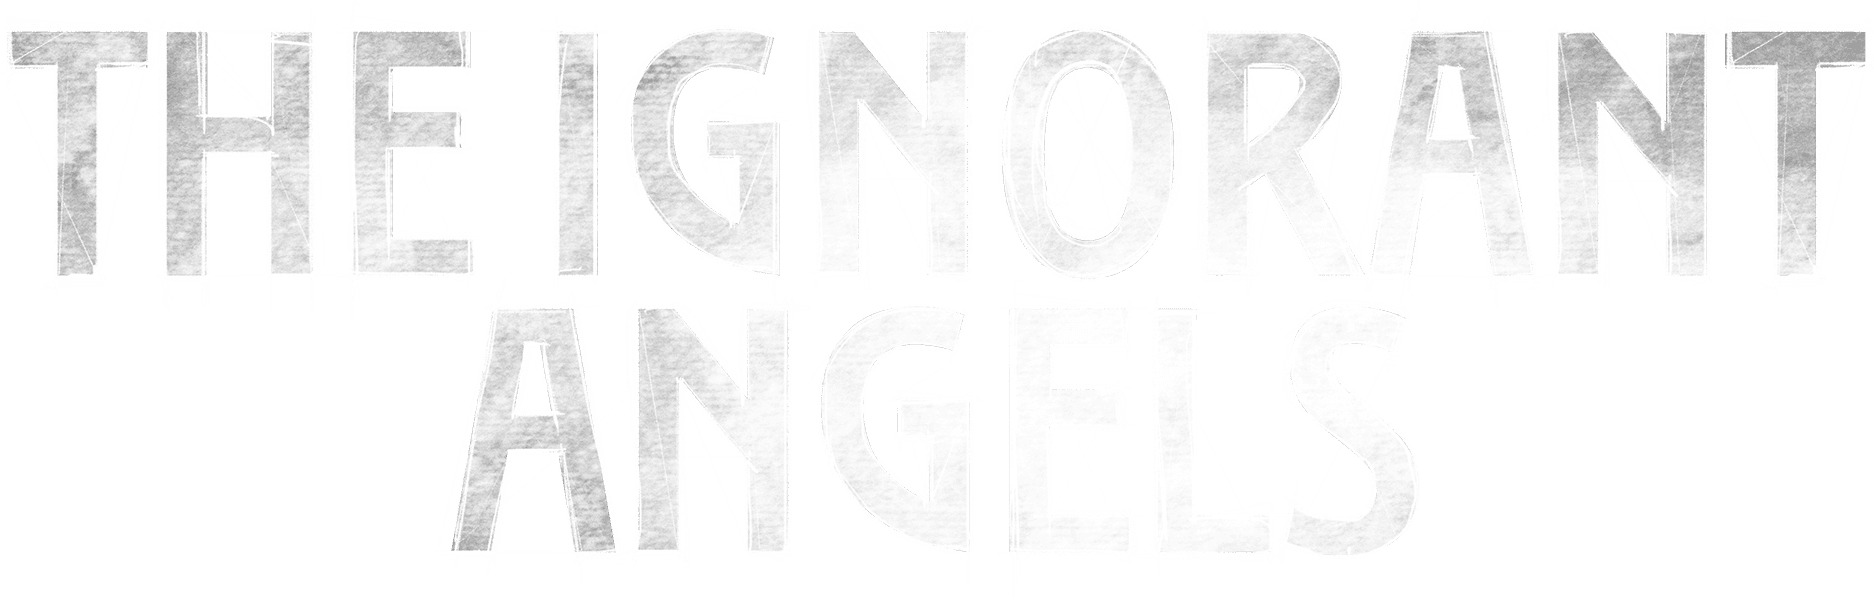 The Ignorant Angels logo